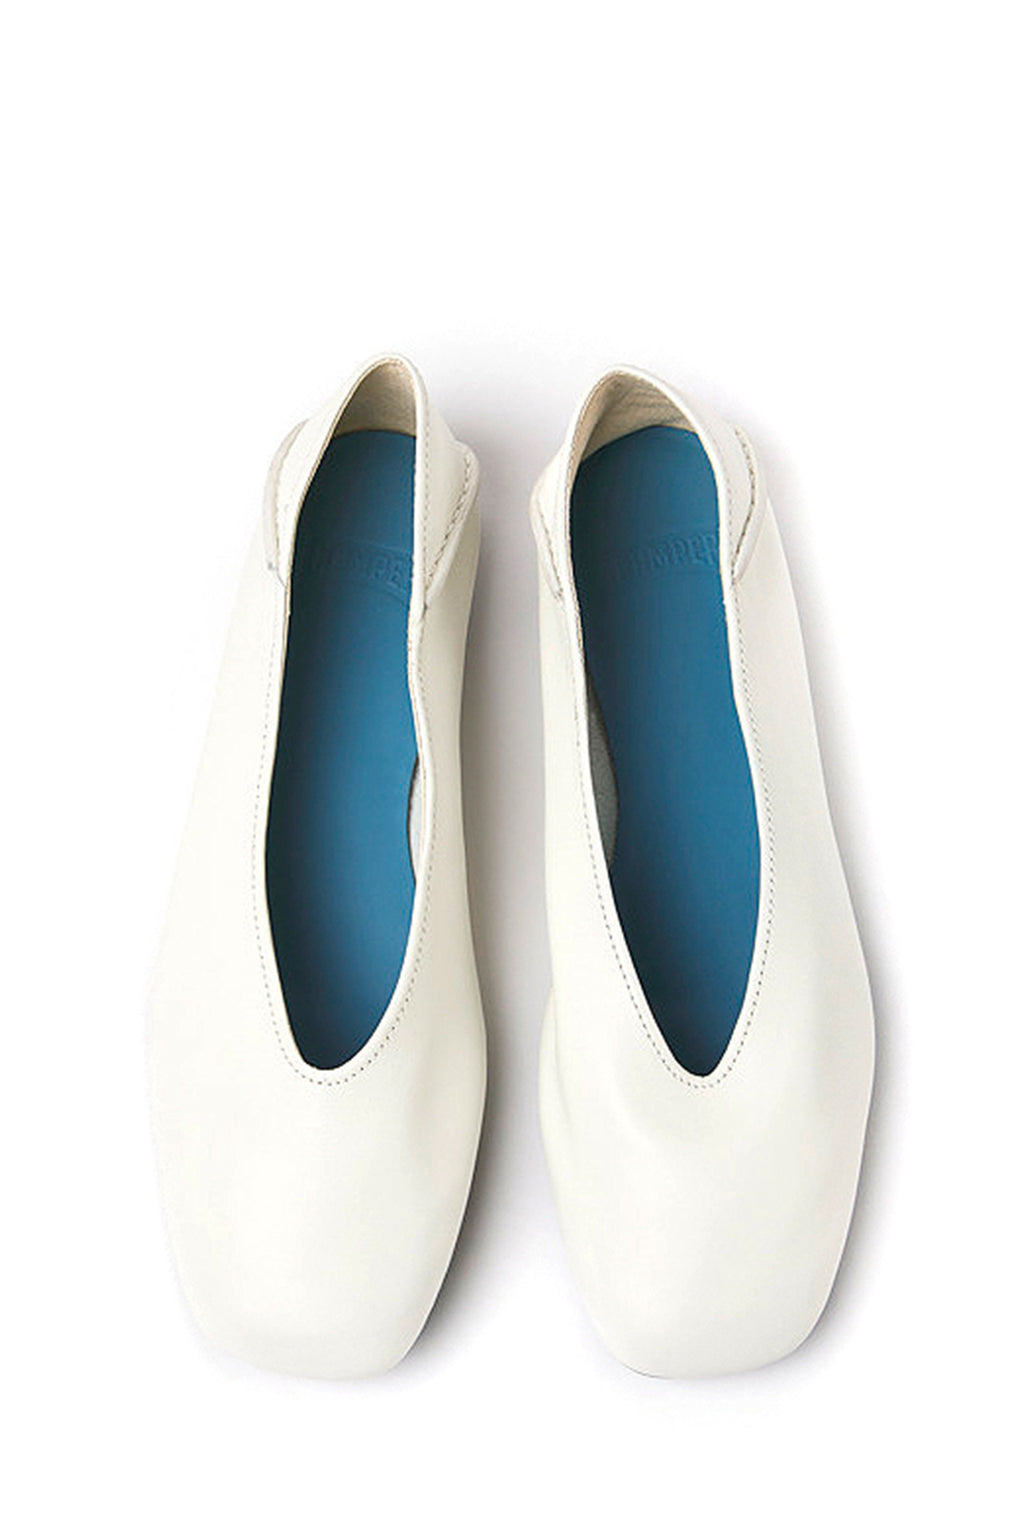 Camper Myra Ballet Shoes, White